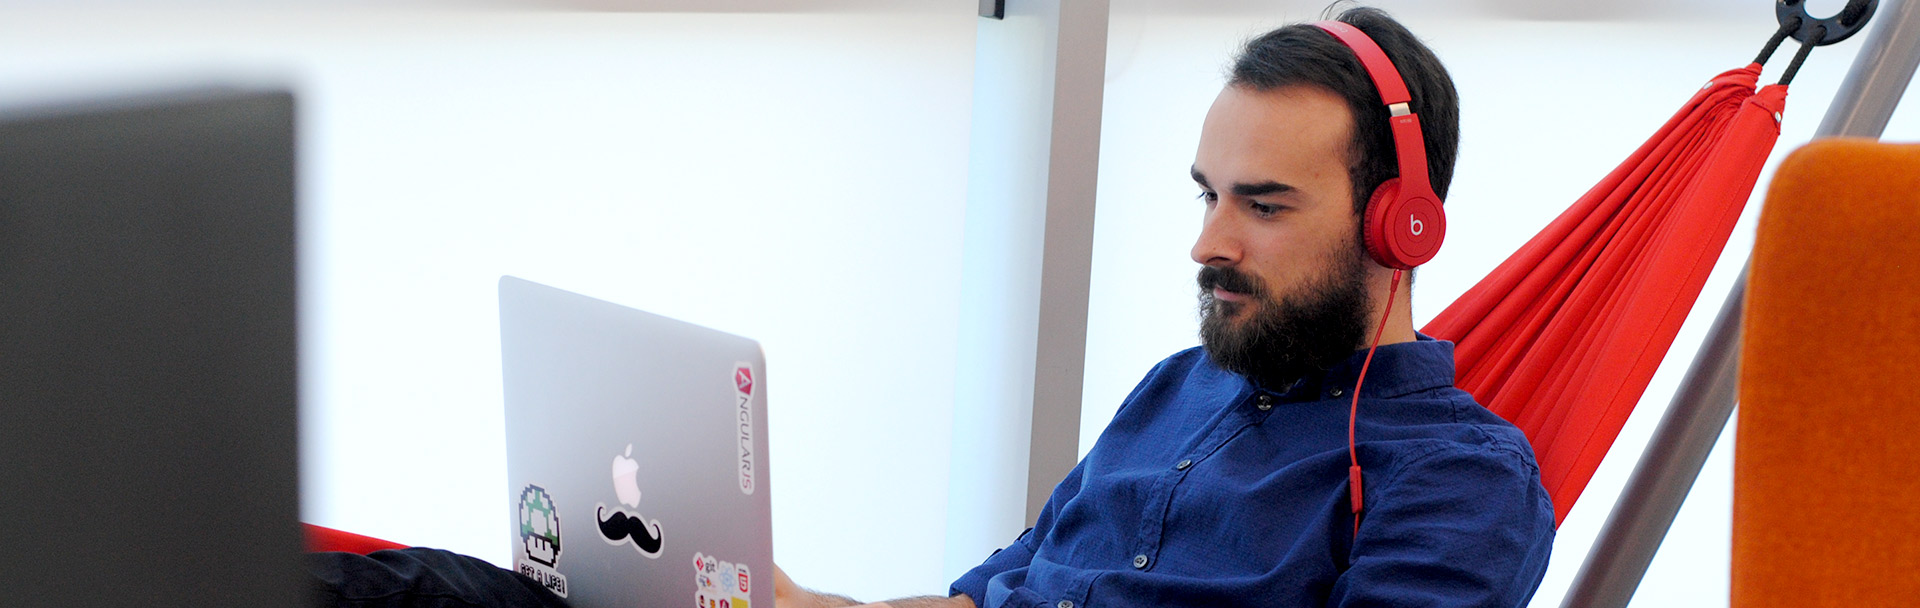 How I work: Andrei, Senior Front-End and UX Developer